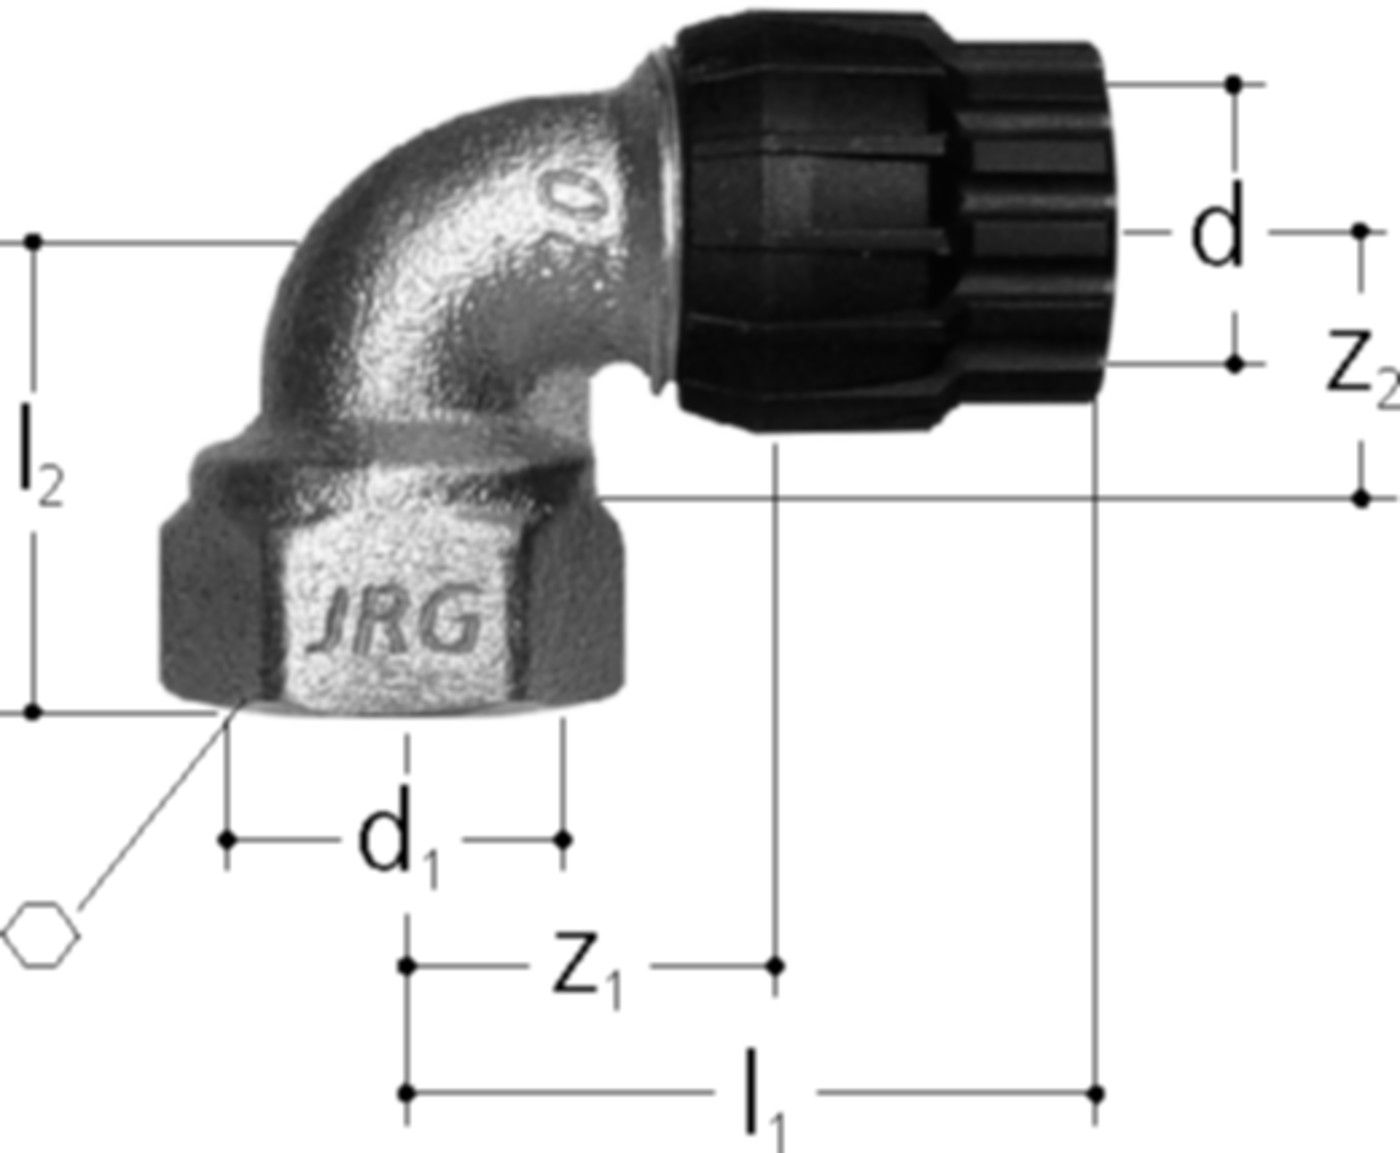 Winkel 90° mit IG 11/2"-50 4671.510 - JRG Sanipex-MT-Formstücke/Rohre in Stg.